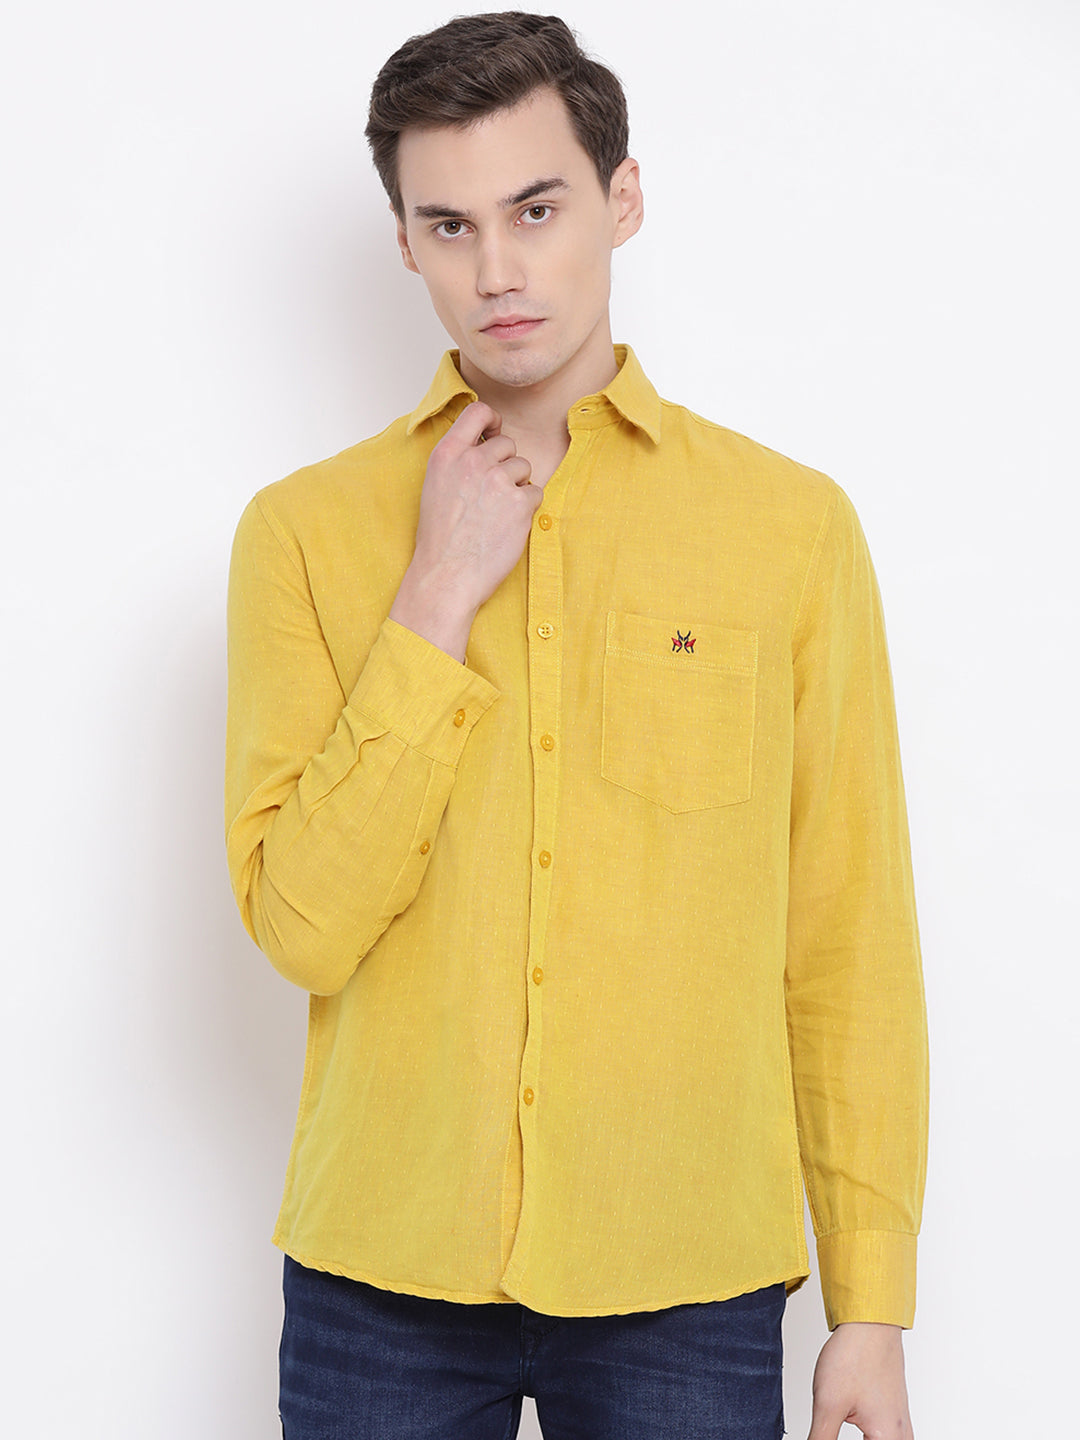 Yellow Printed Shirt - Men Shirts